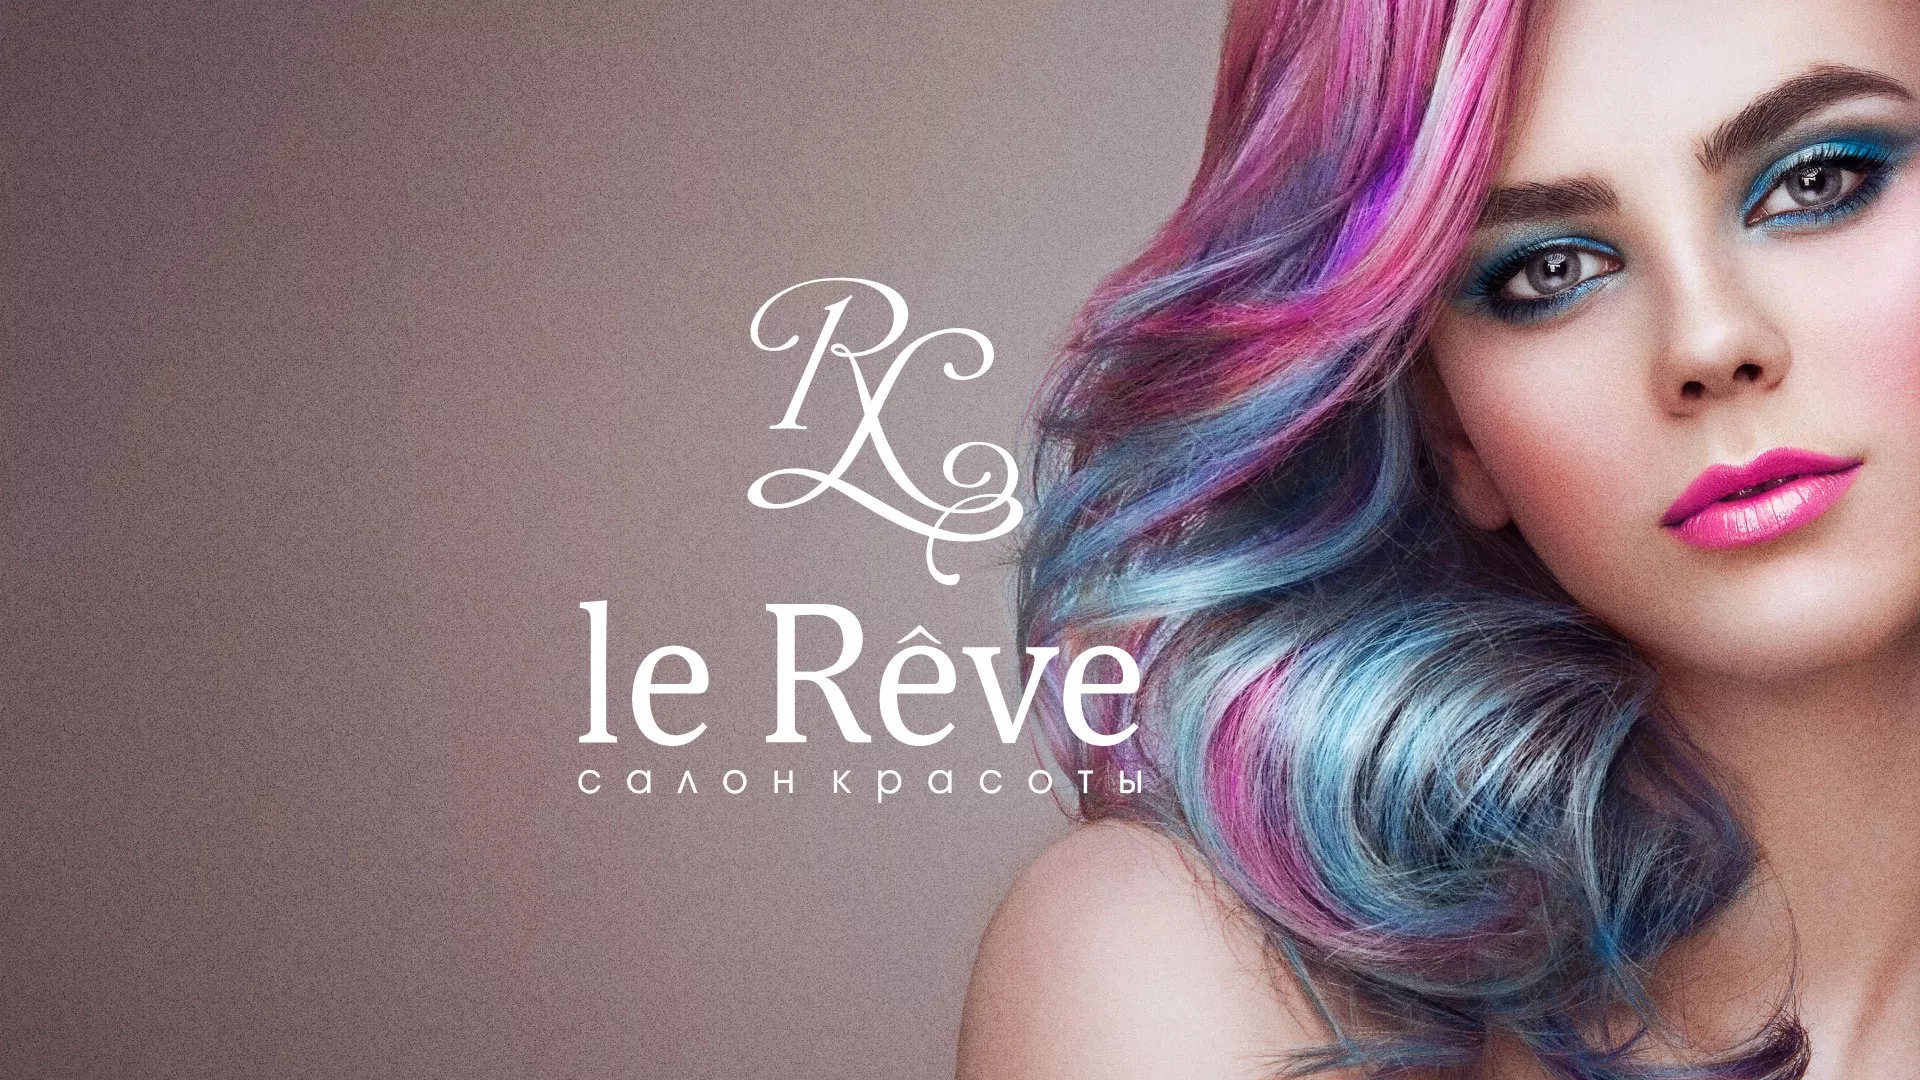 Создание сайта для салона красоты «Le Reve» в Шацке